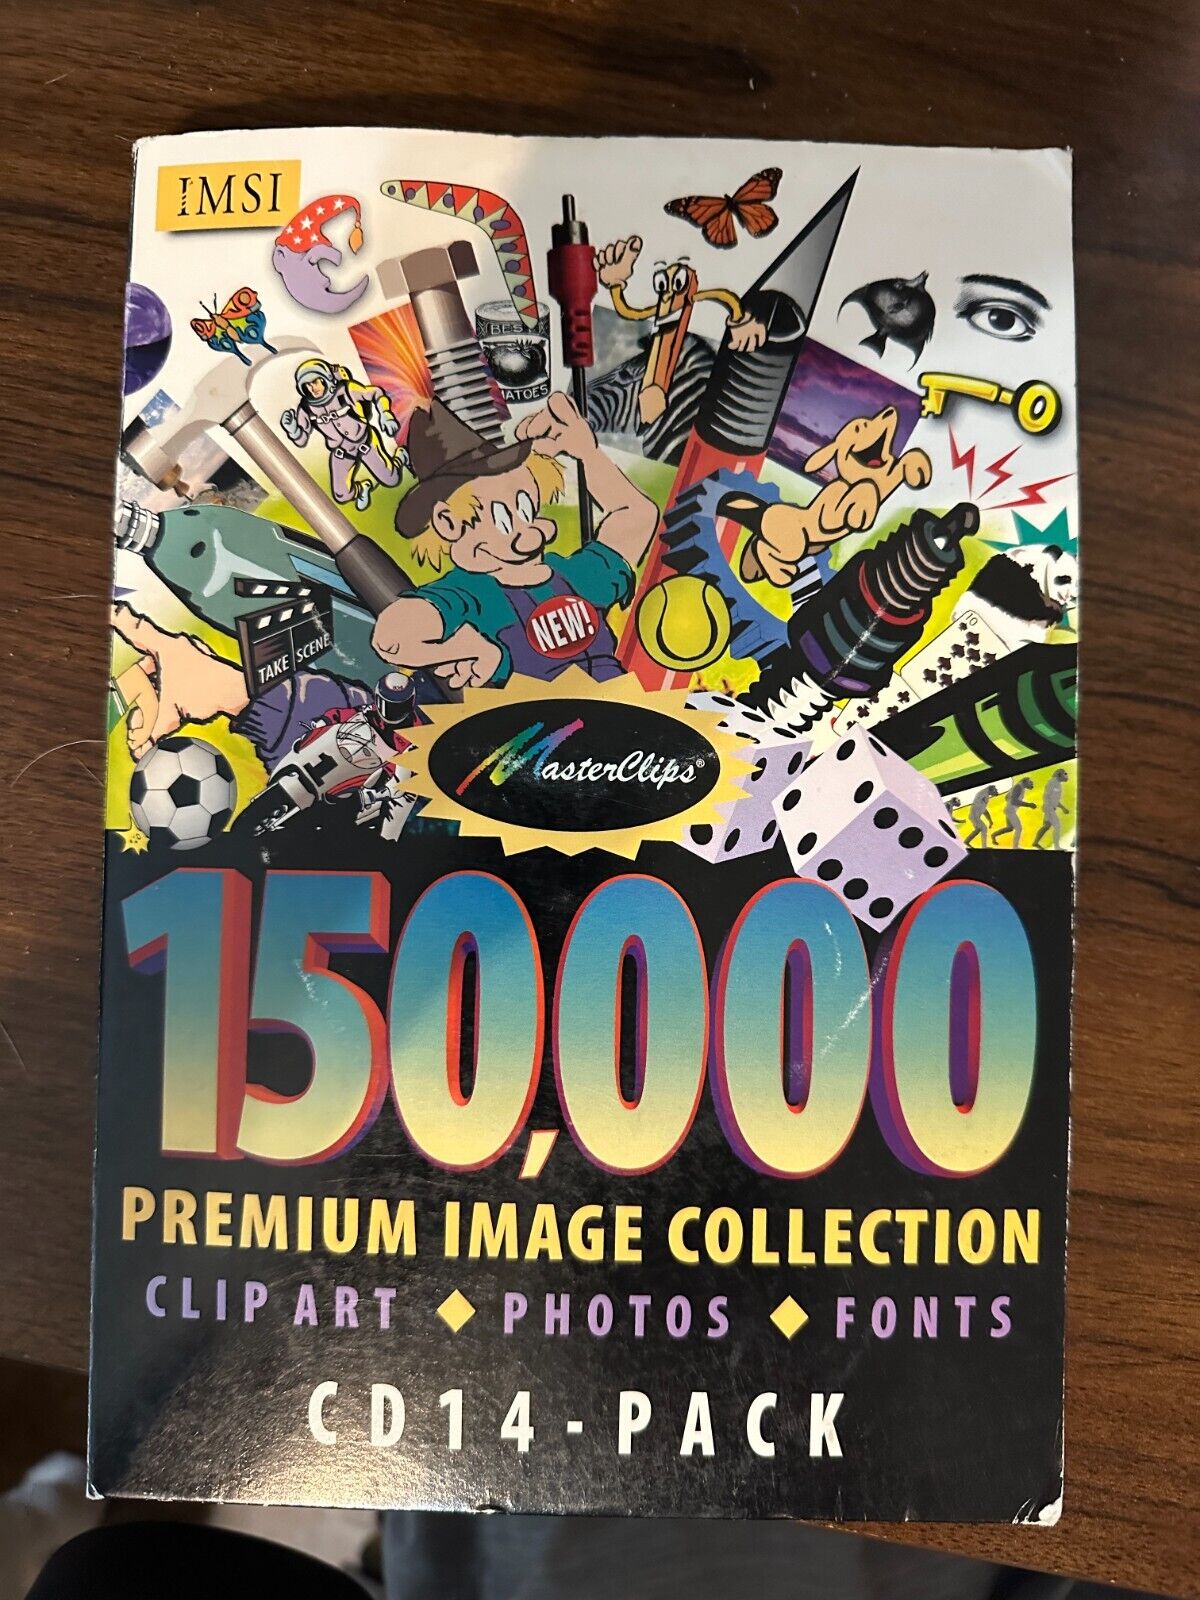 Masterclips 150,000 Premium Image Collection Clip Art  14 Pack Windows 1997 IMSI